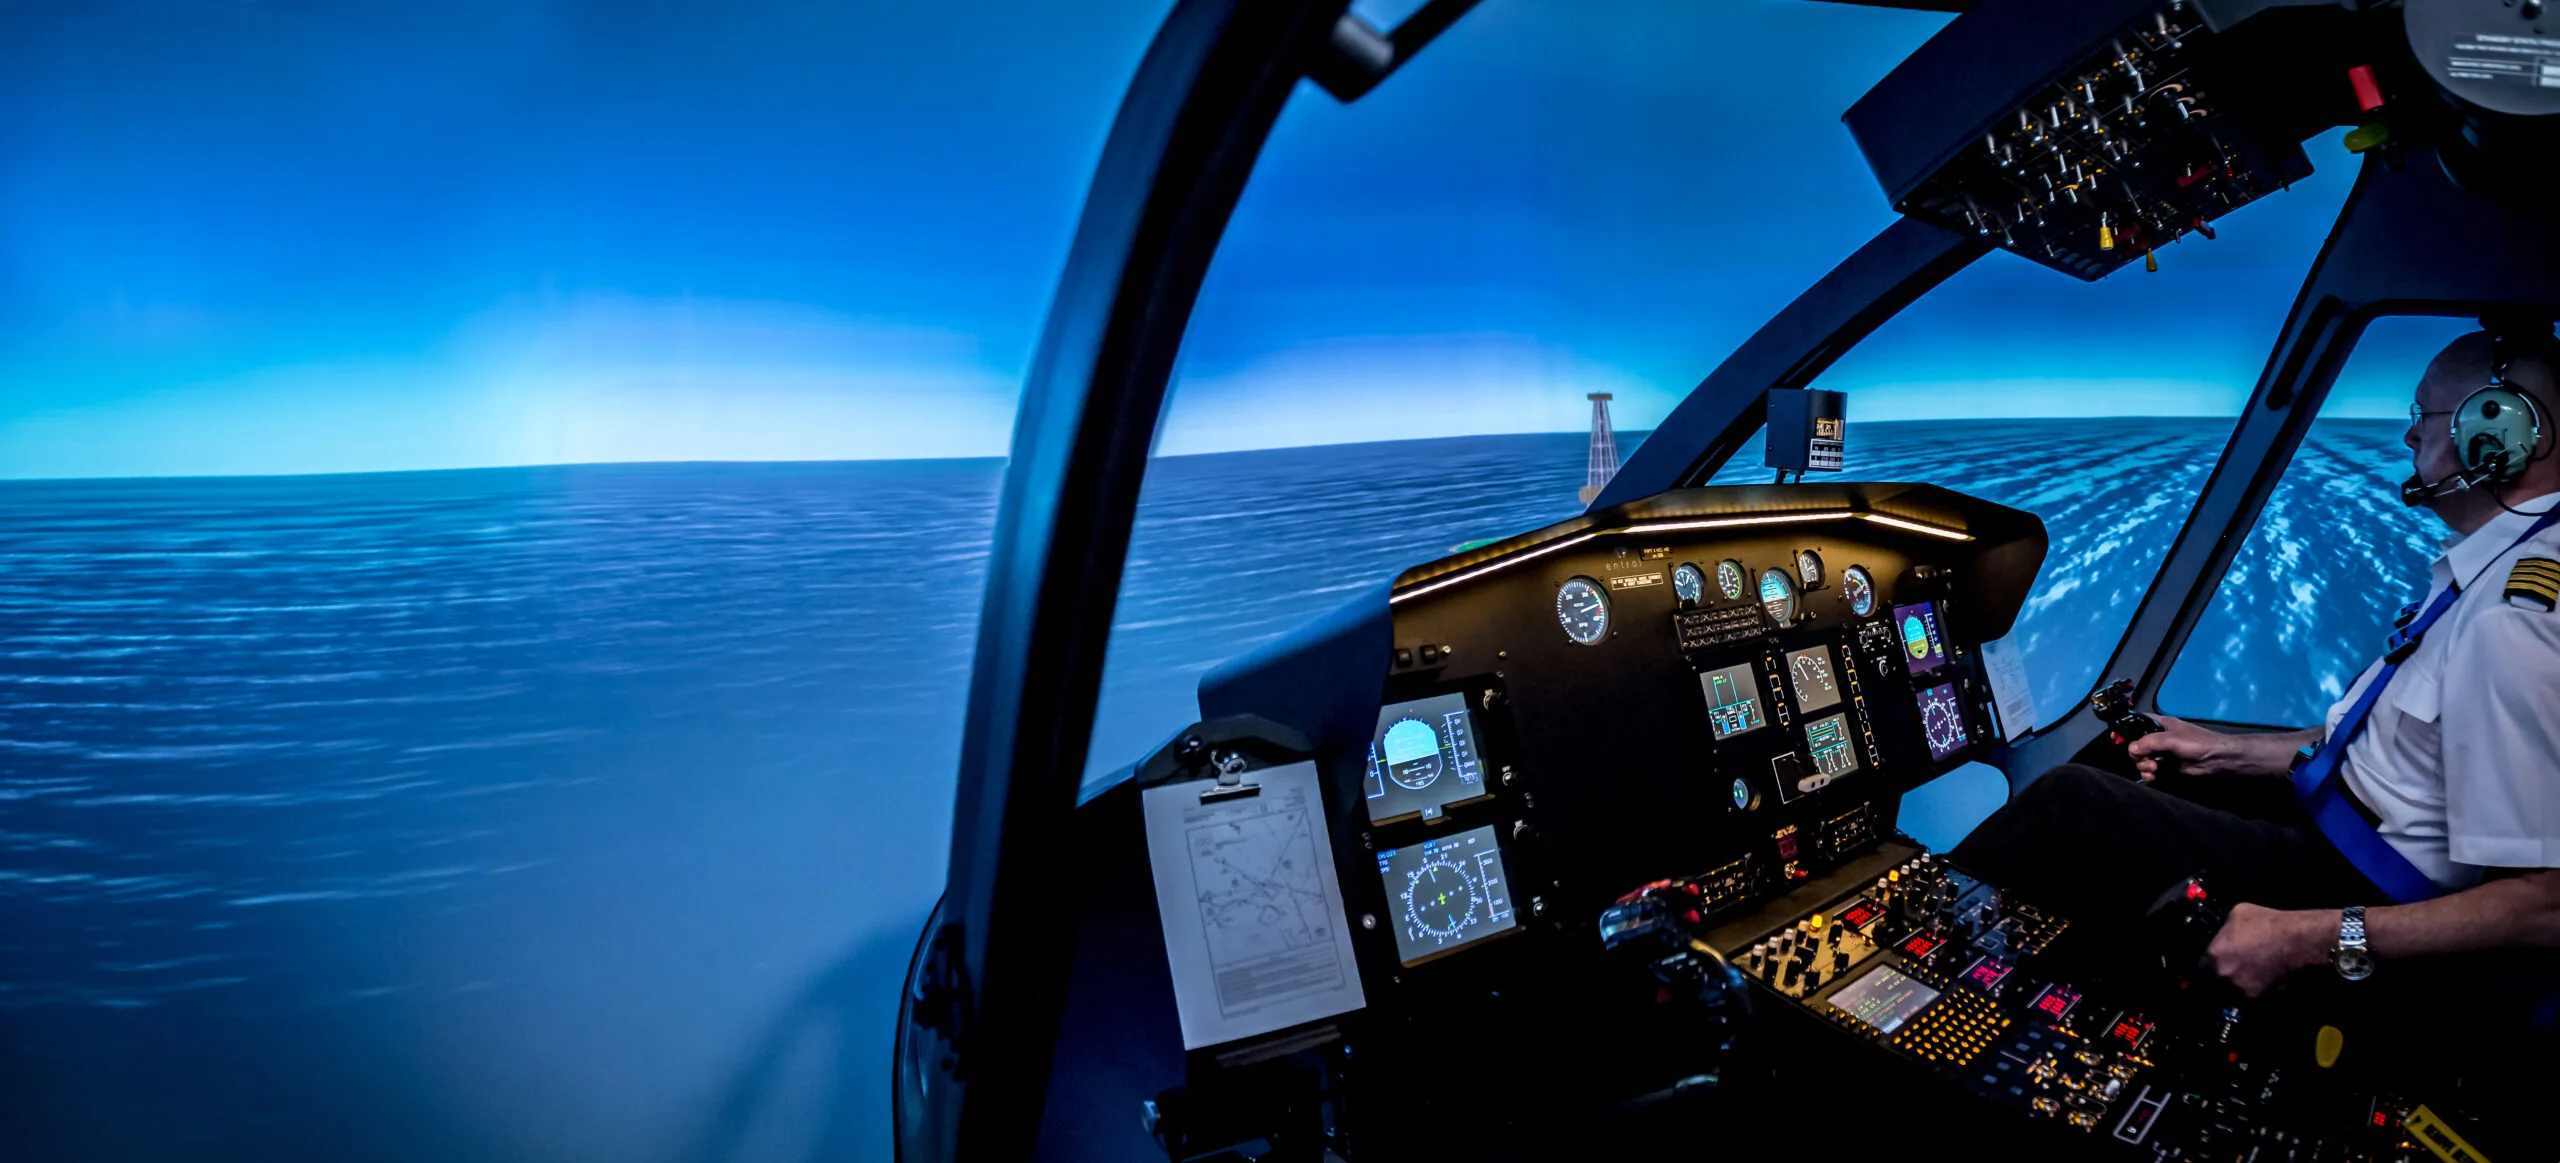 H155 simulator cockpit